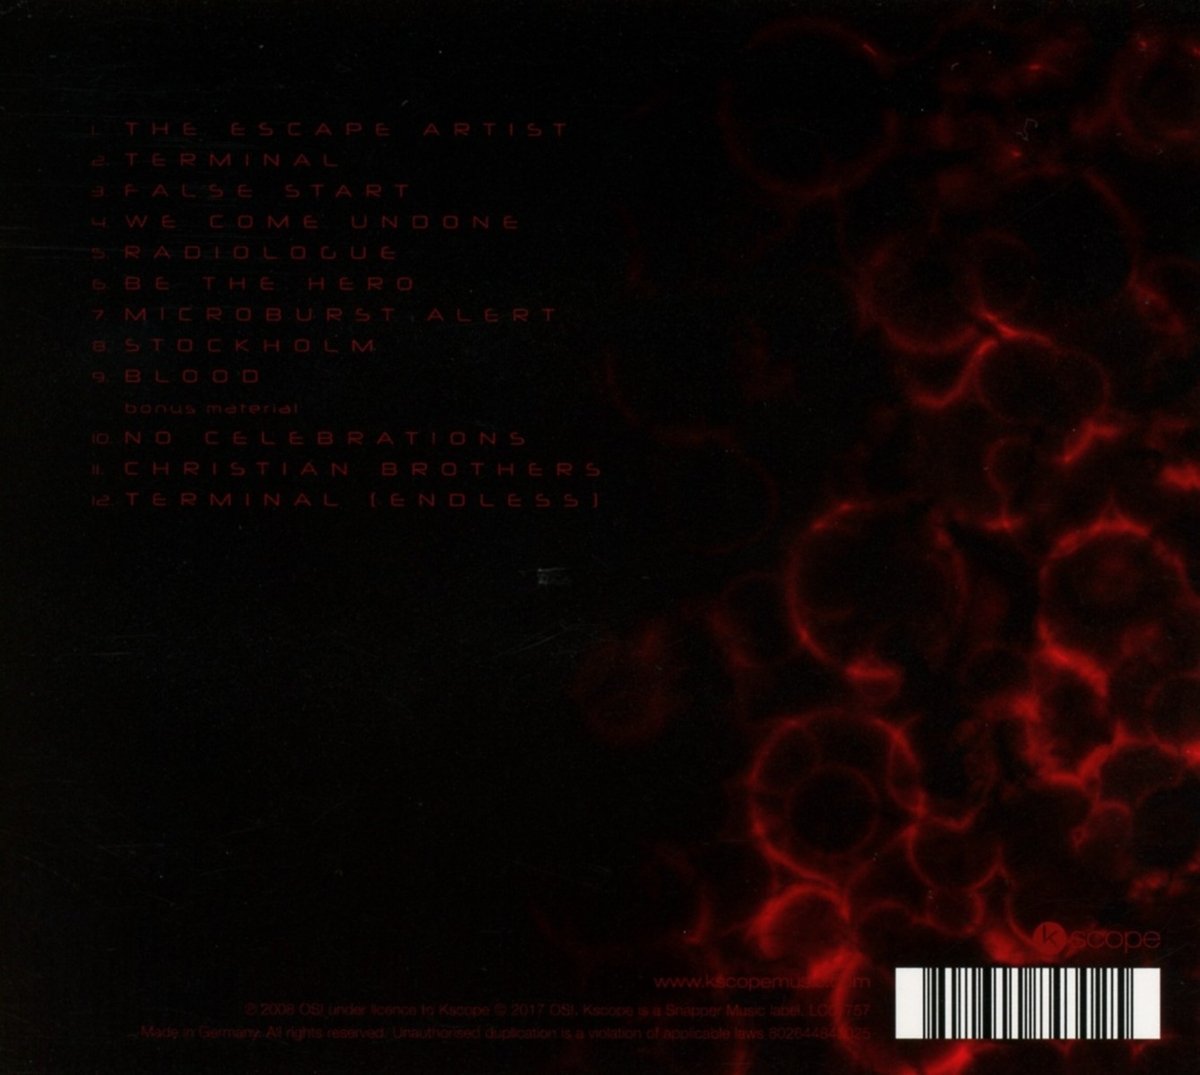 OSI - Blood (2017 reissue with 3 bonus tracks) - CD - New